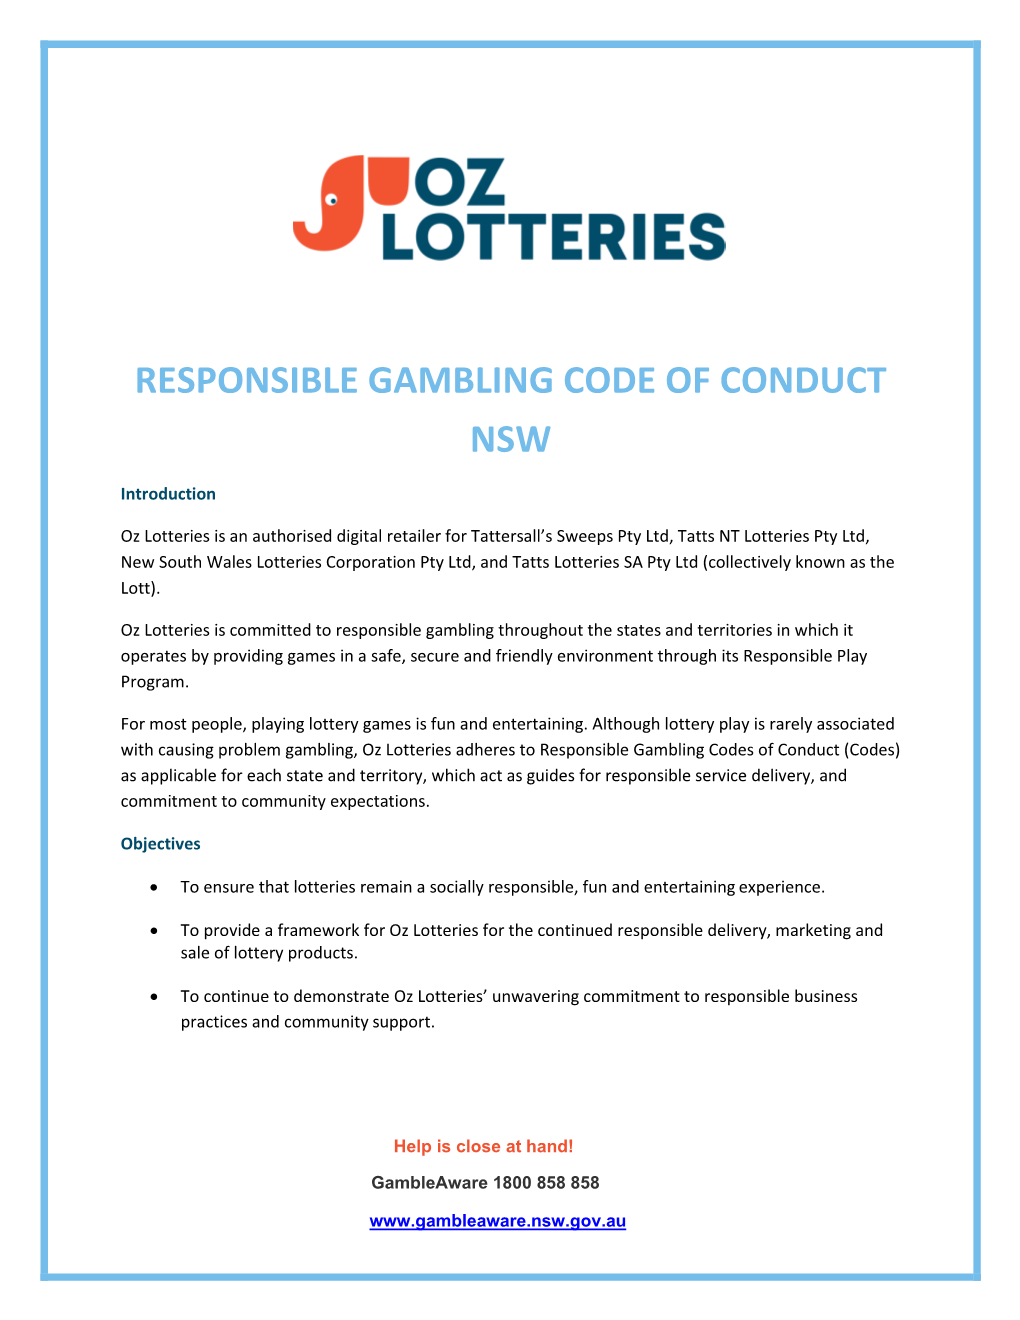 Responsible Gambling Code of Conduct Nsw